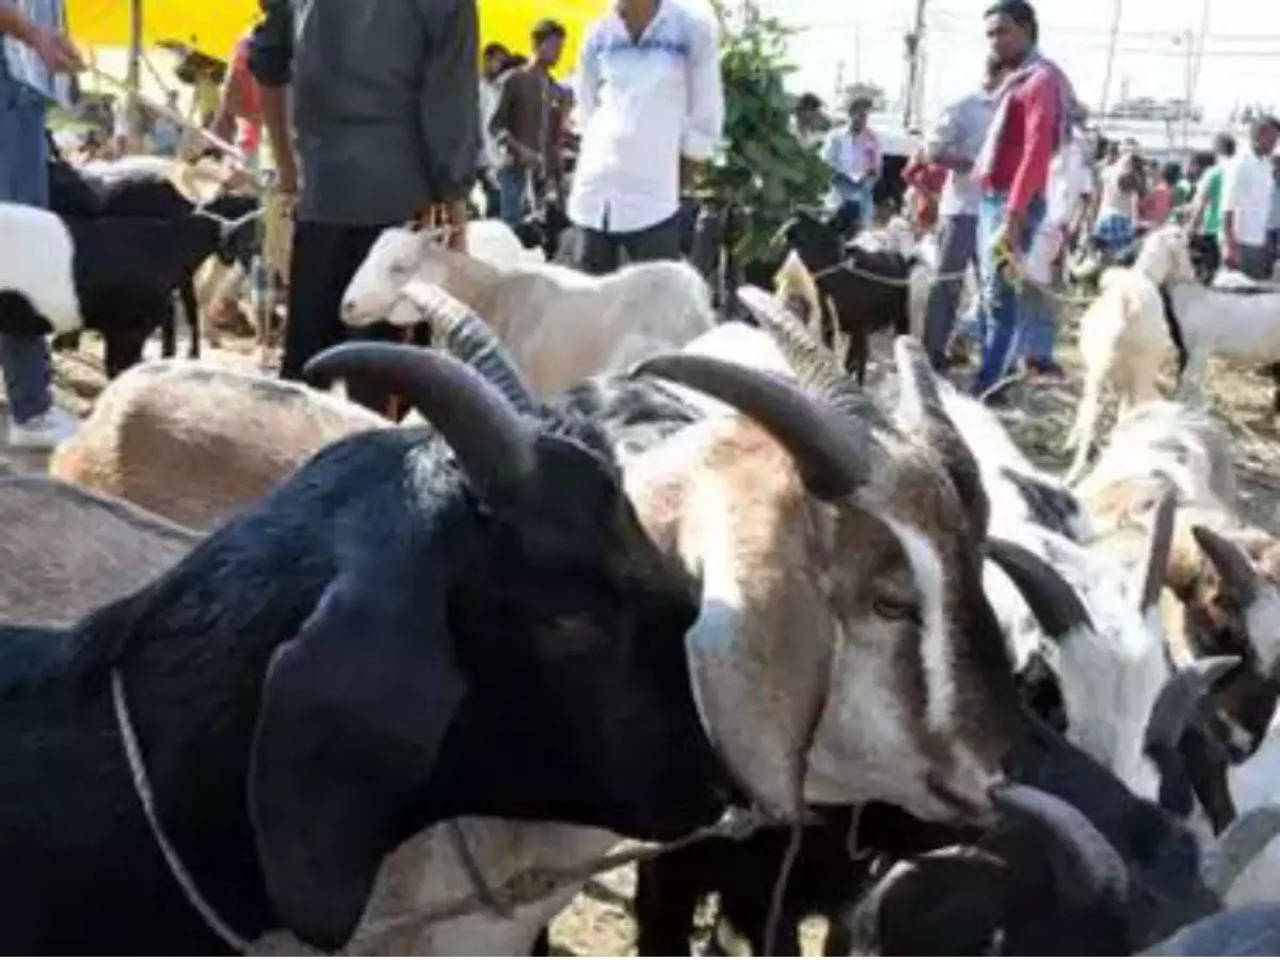 PM Modi urged to ban animal sacrifice | India News - Times of India